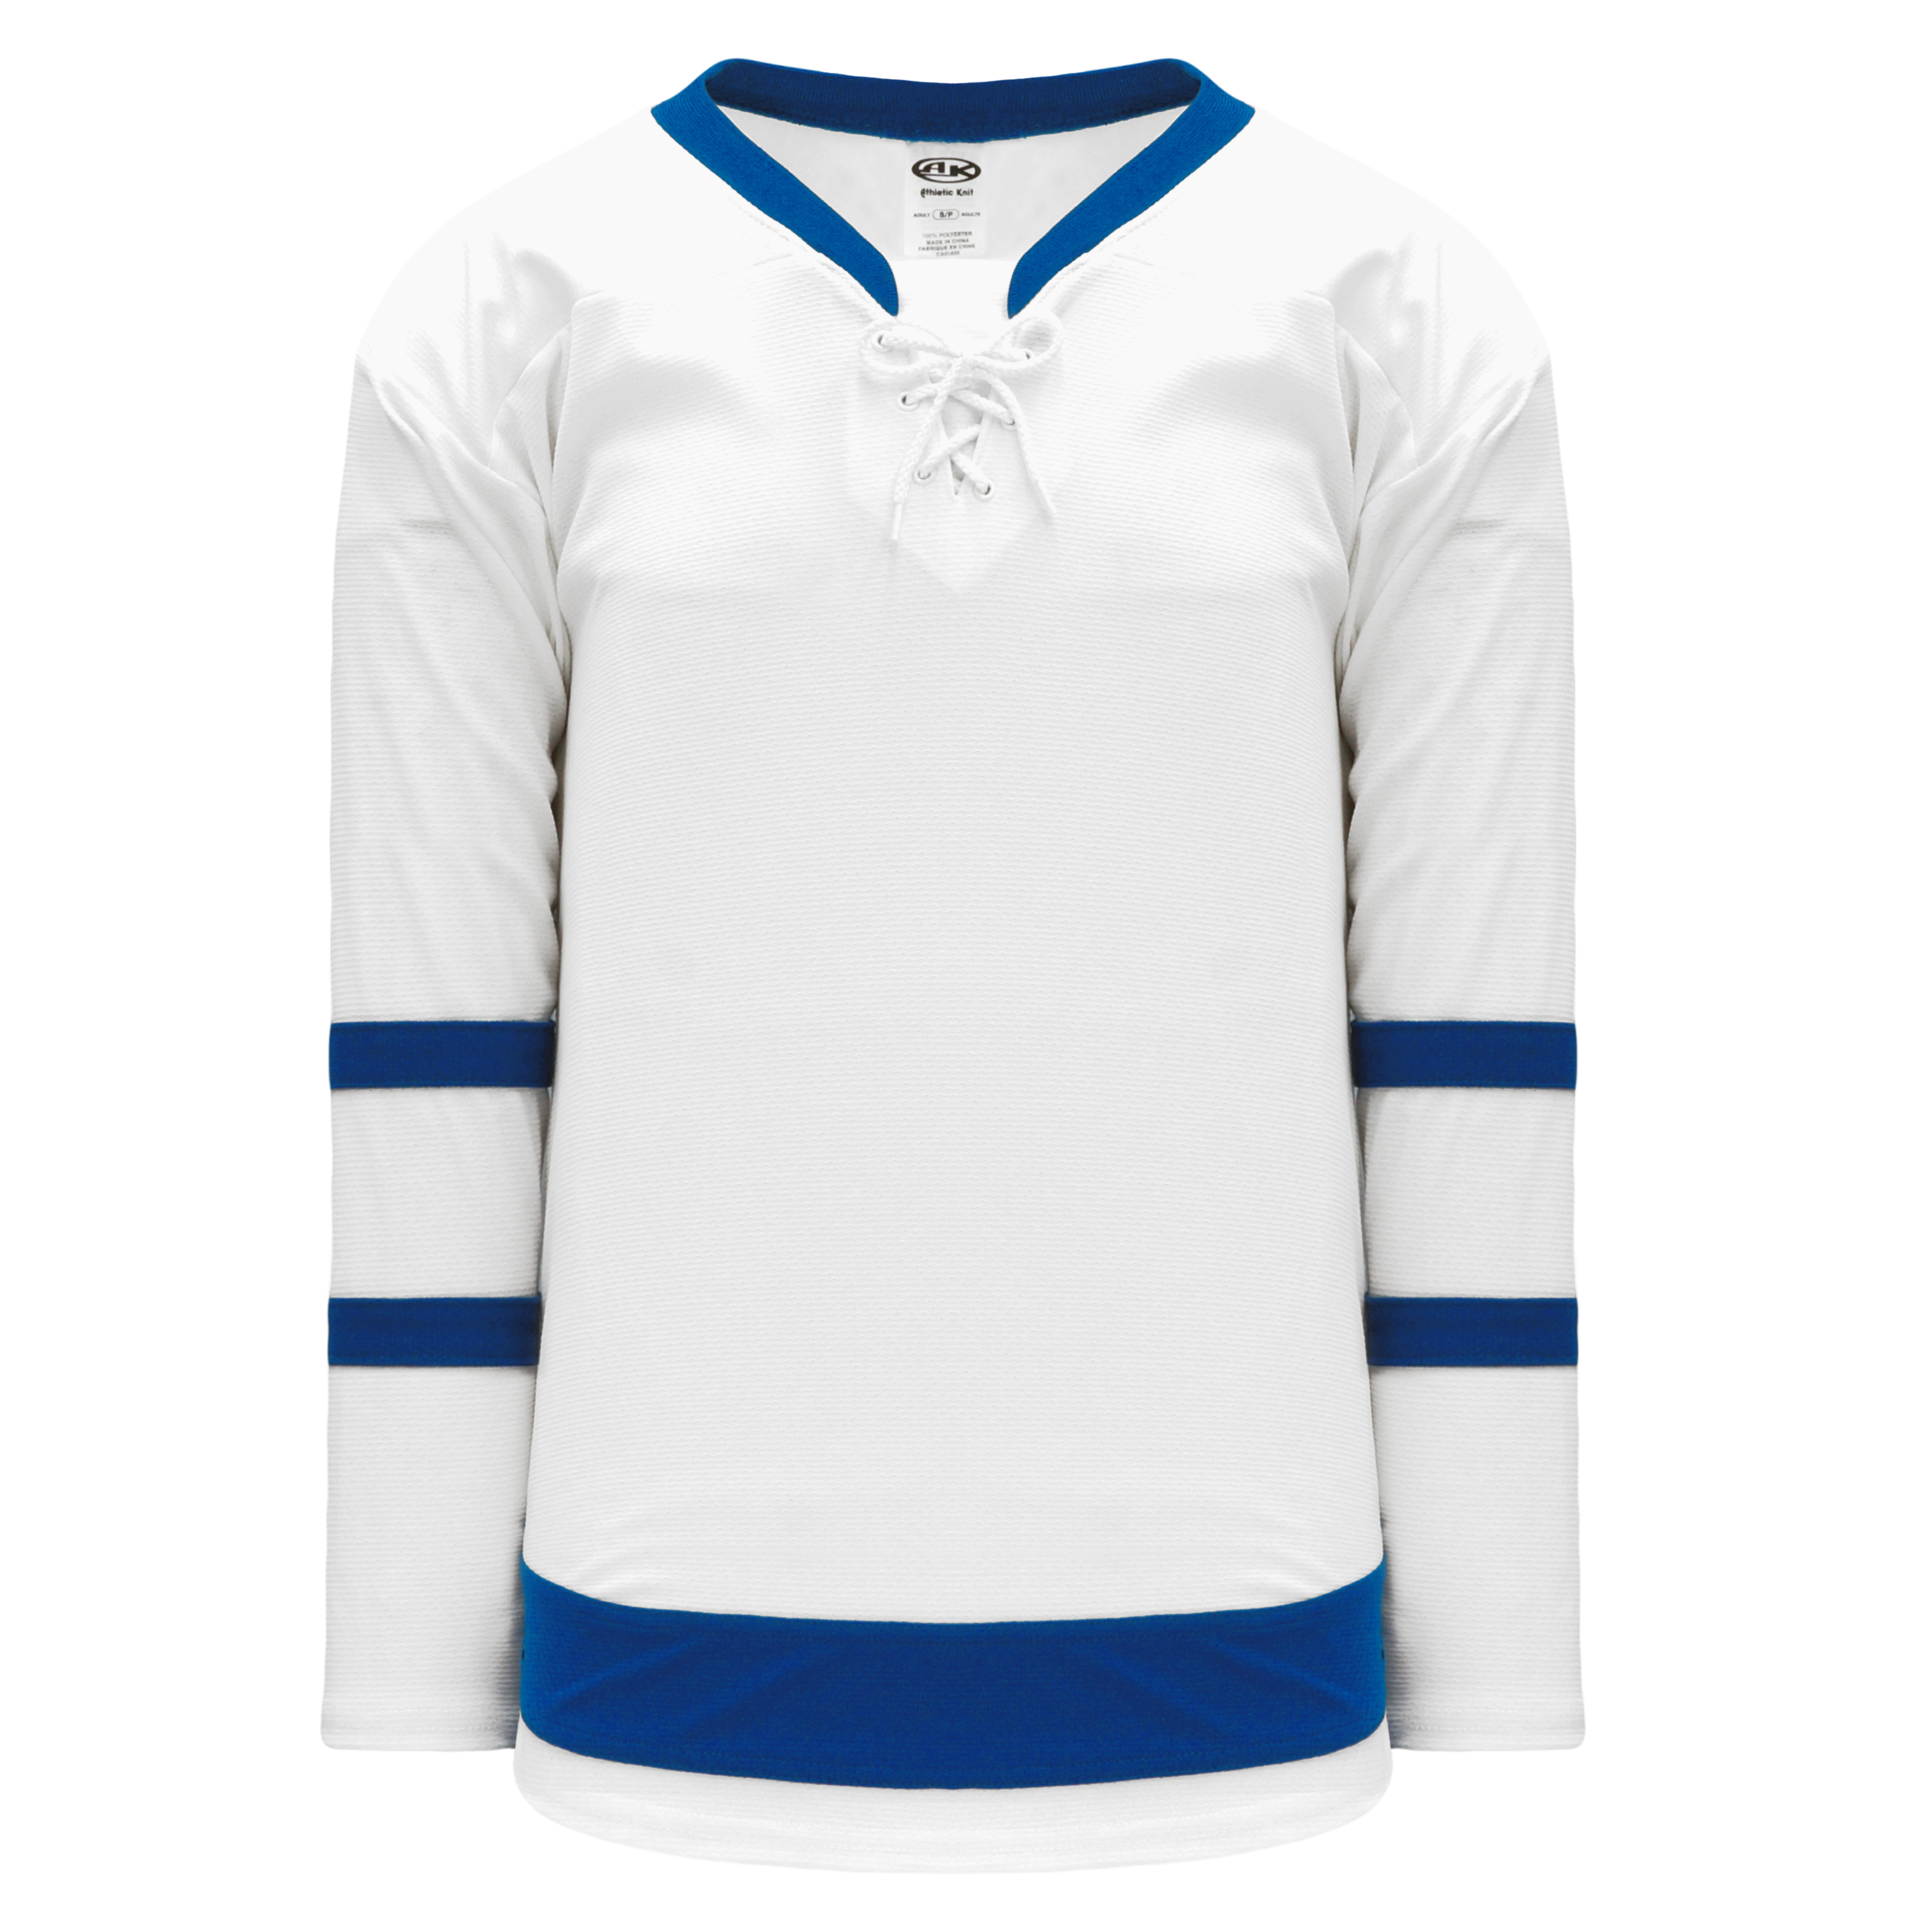 Toronto Maple Leaf T Shirt NHL Hockey Shirt Youth Sport 